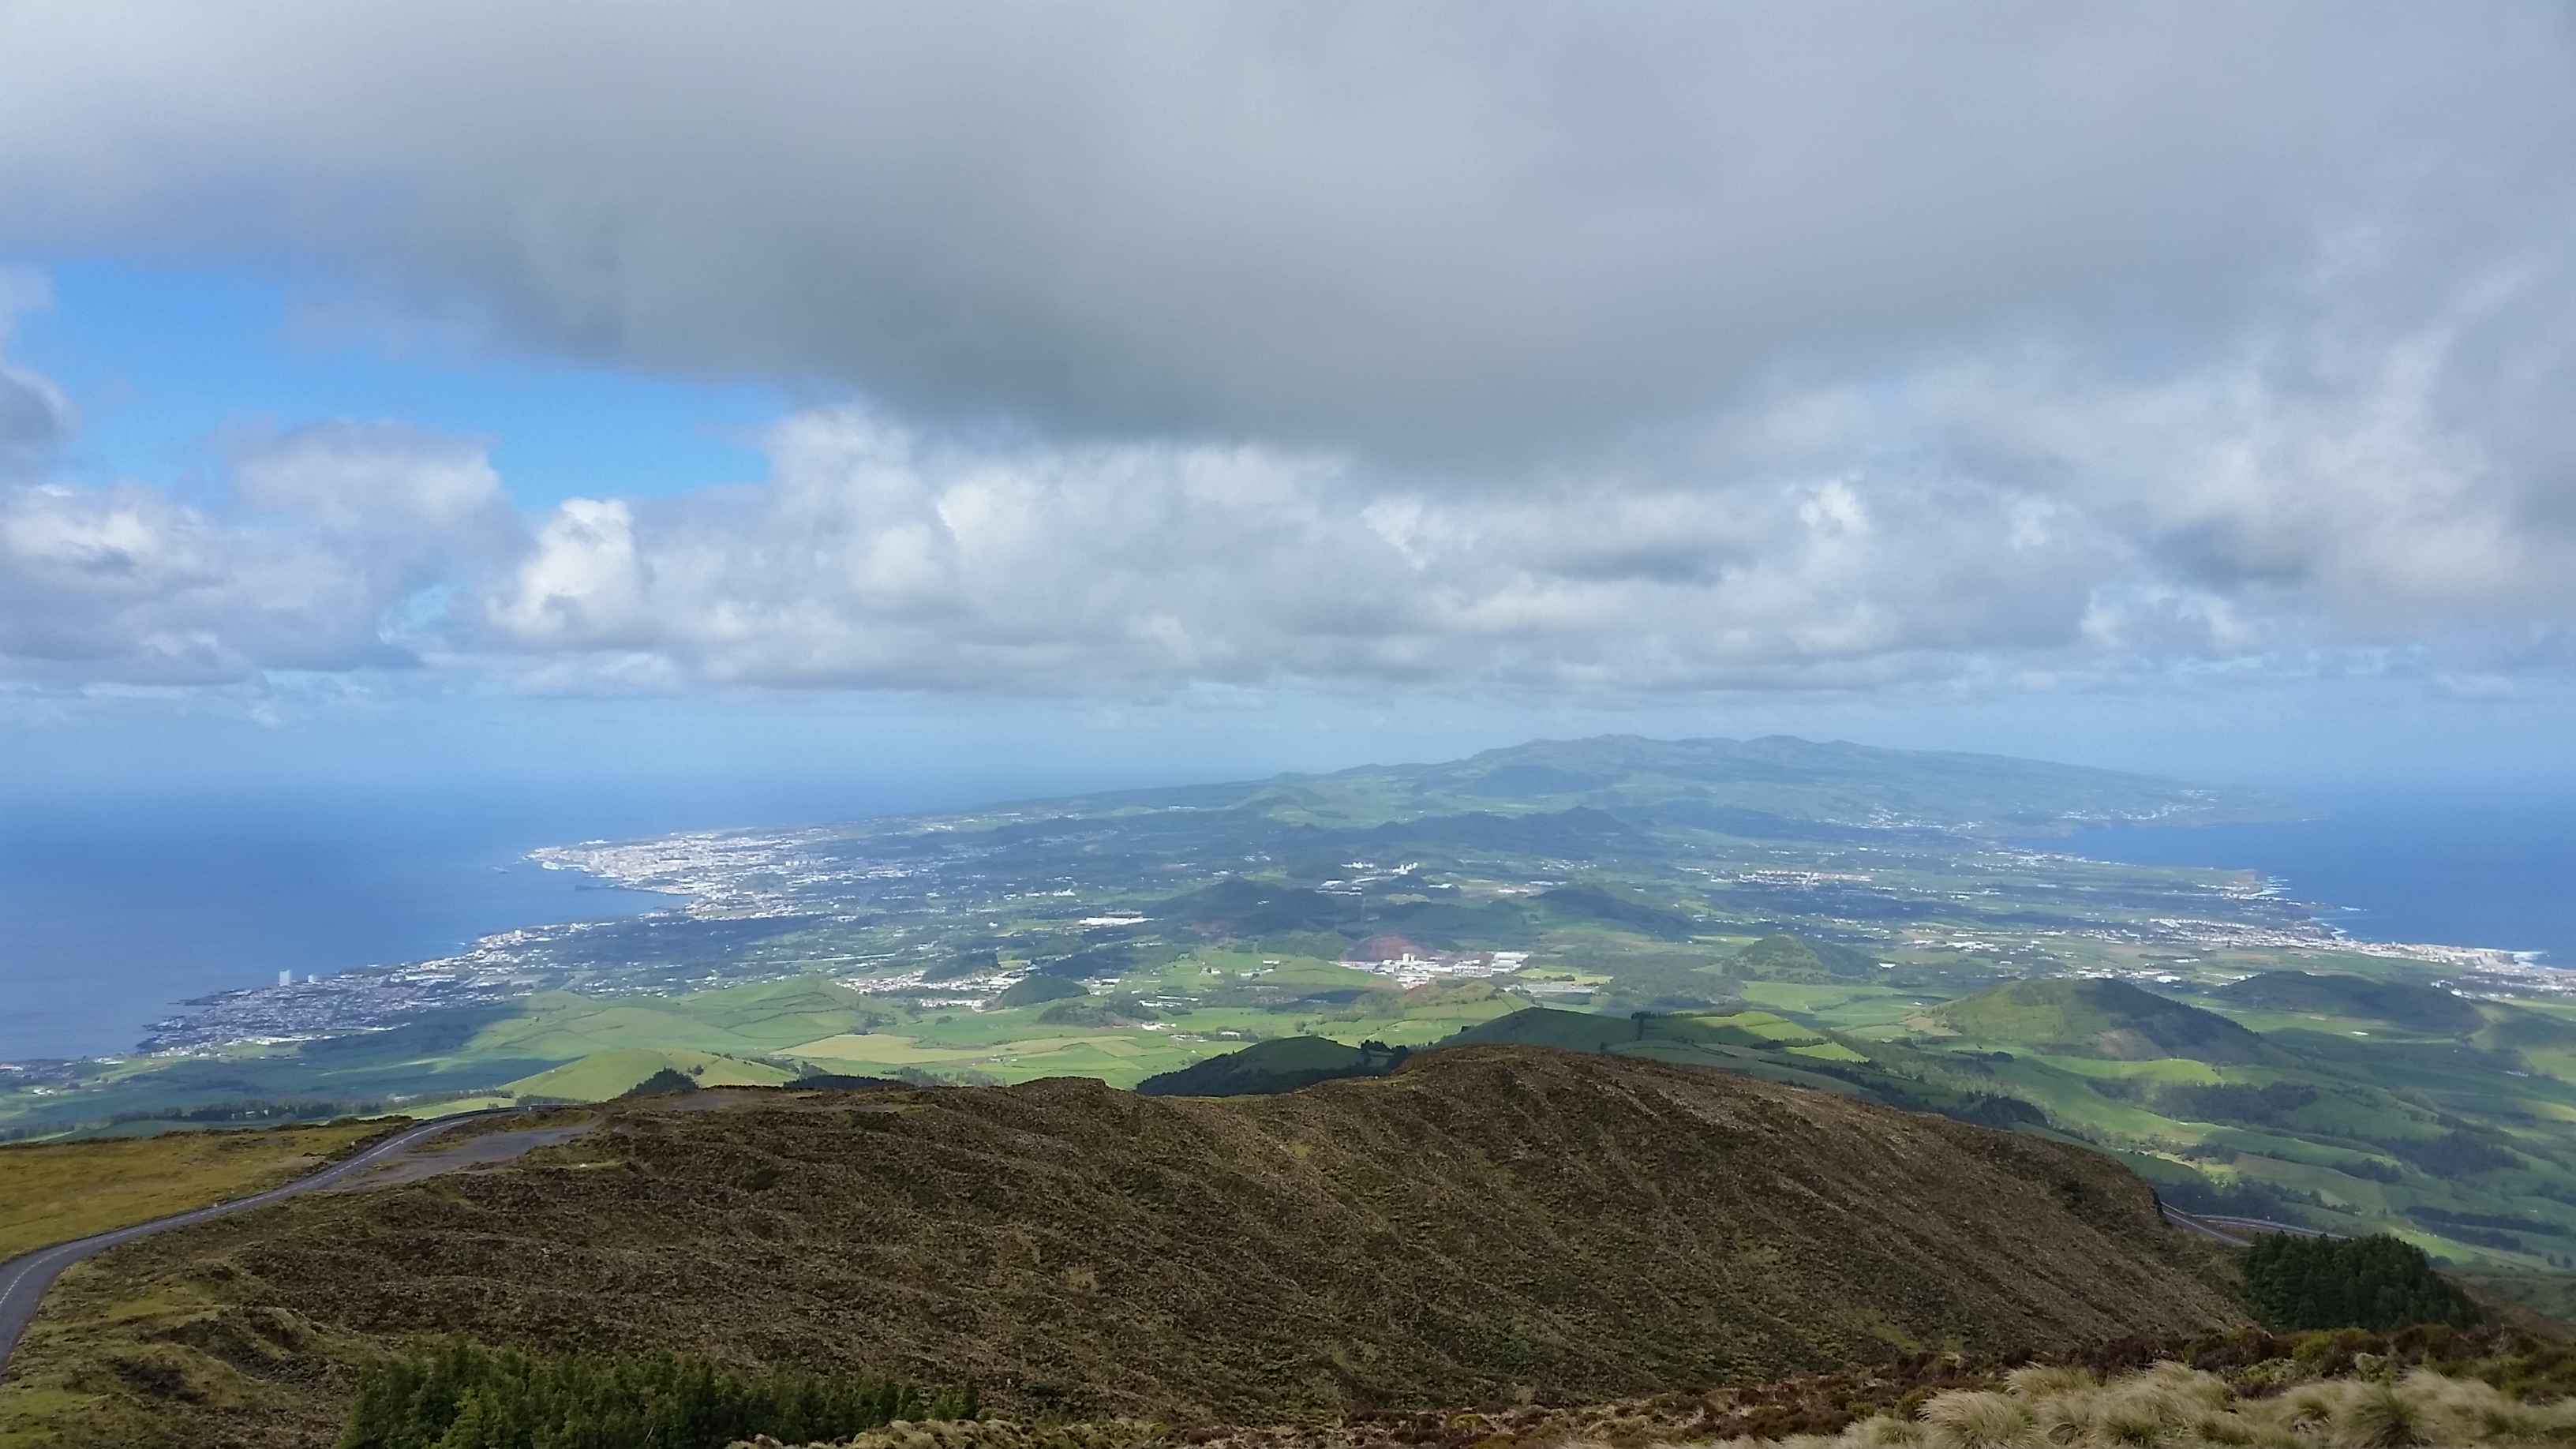 Top of Pico da Barrosa (Sao Miguel island)